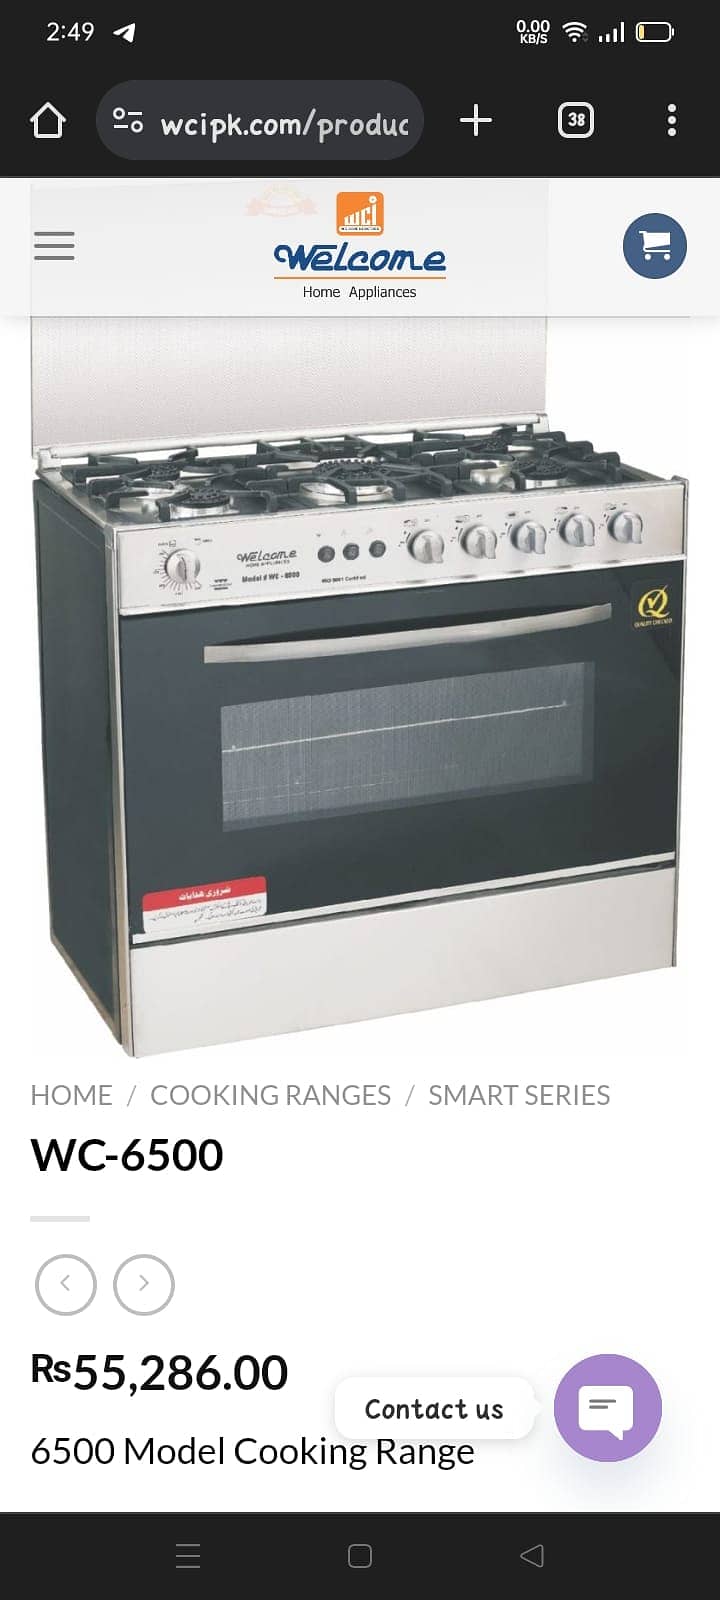 Cooking range 6500 model Wc 6500 1